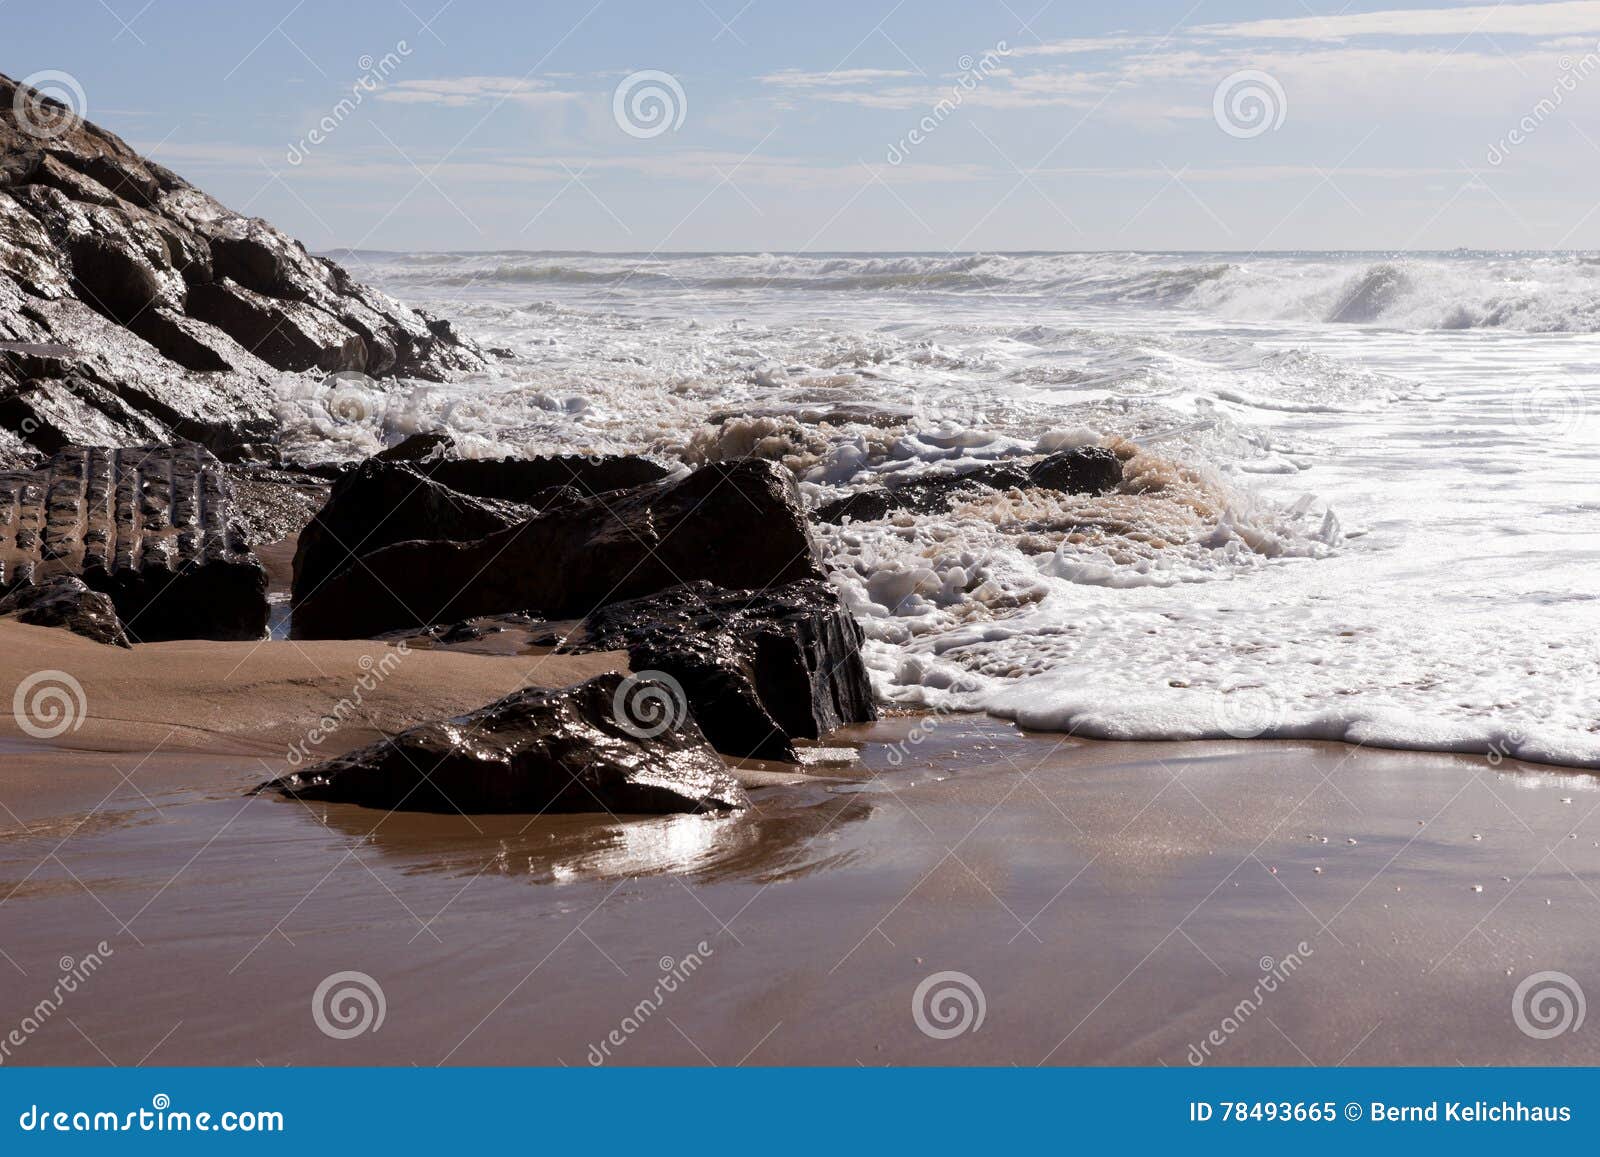 waves on the beach areia branca. west coast of portugal